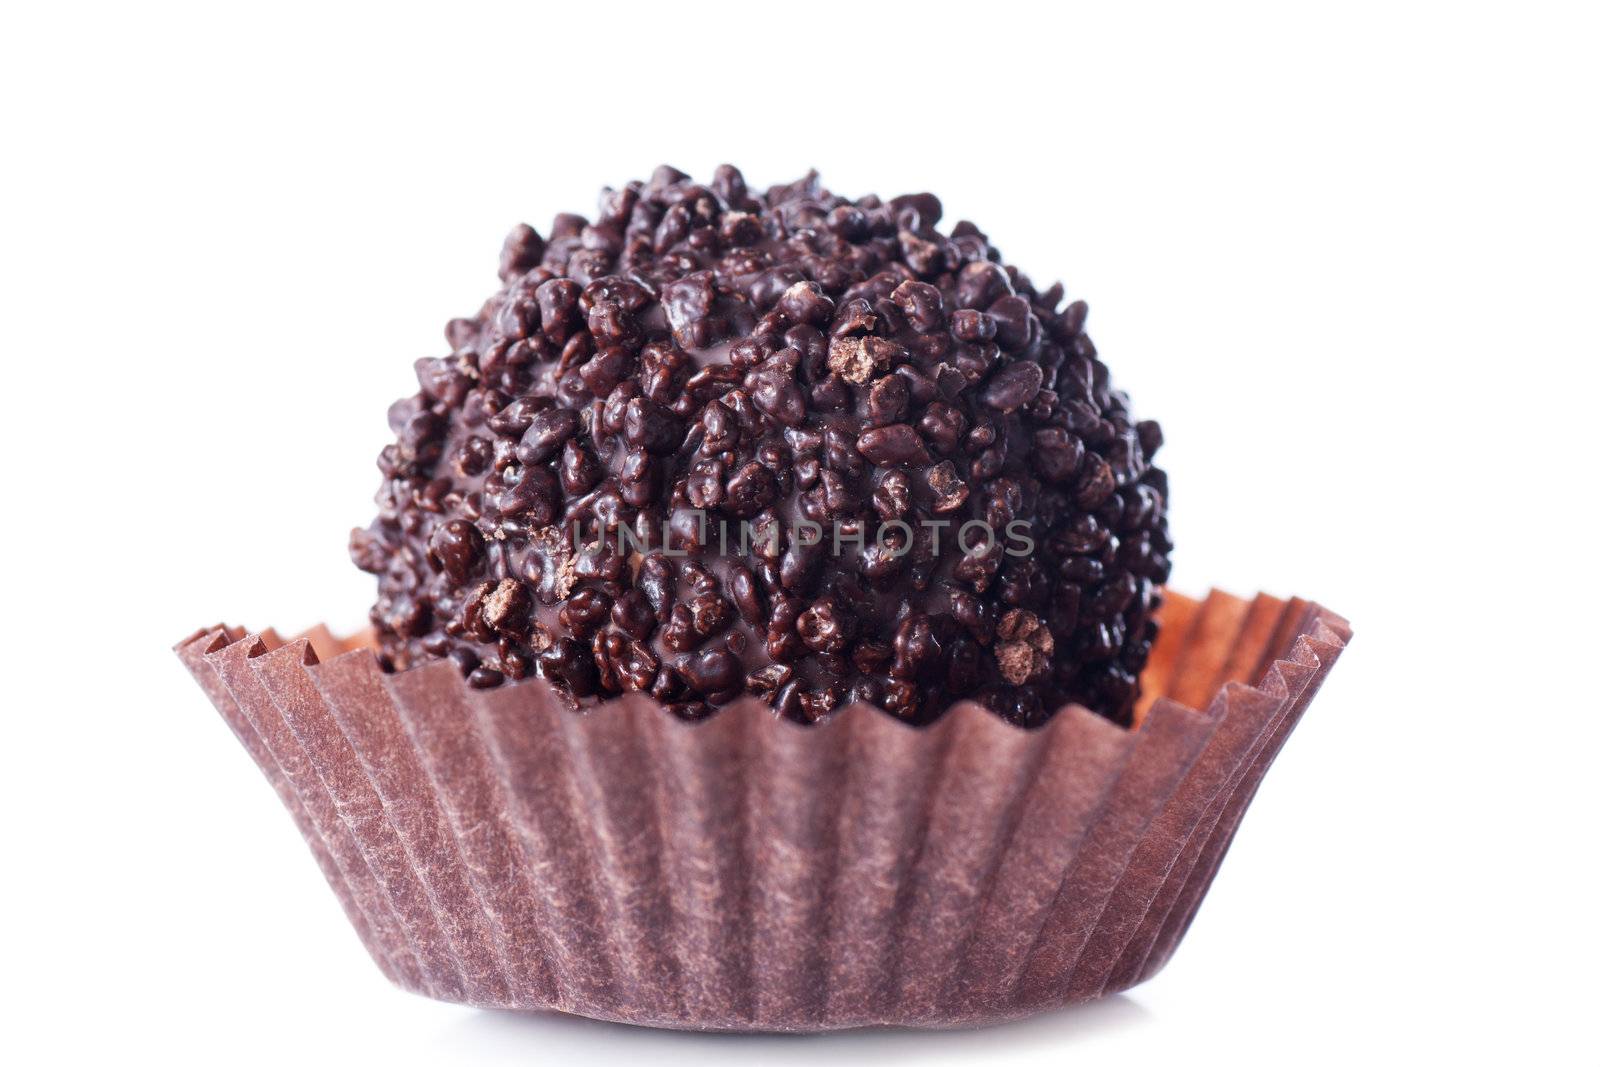 A closeup view of chocolate truffle.